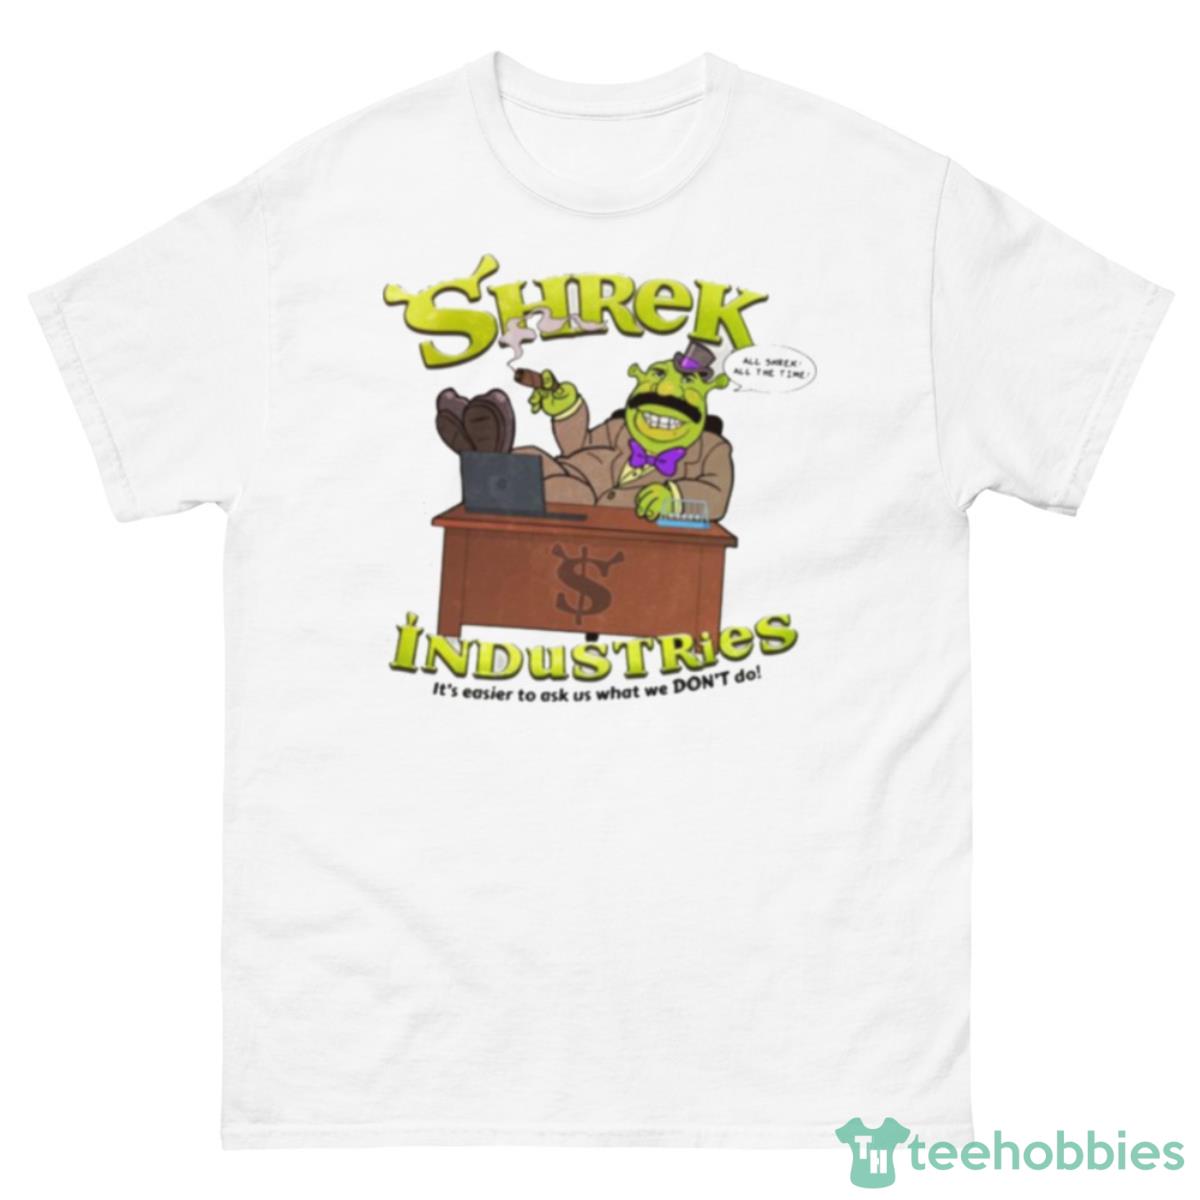 $hrek Industries Cartoon Art Shrek Shirt - 500 Men’s Classic Tee Gildan